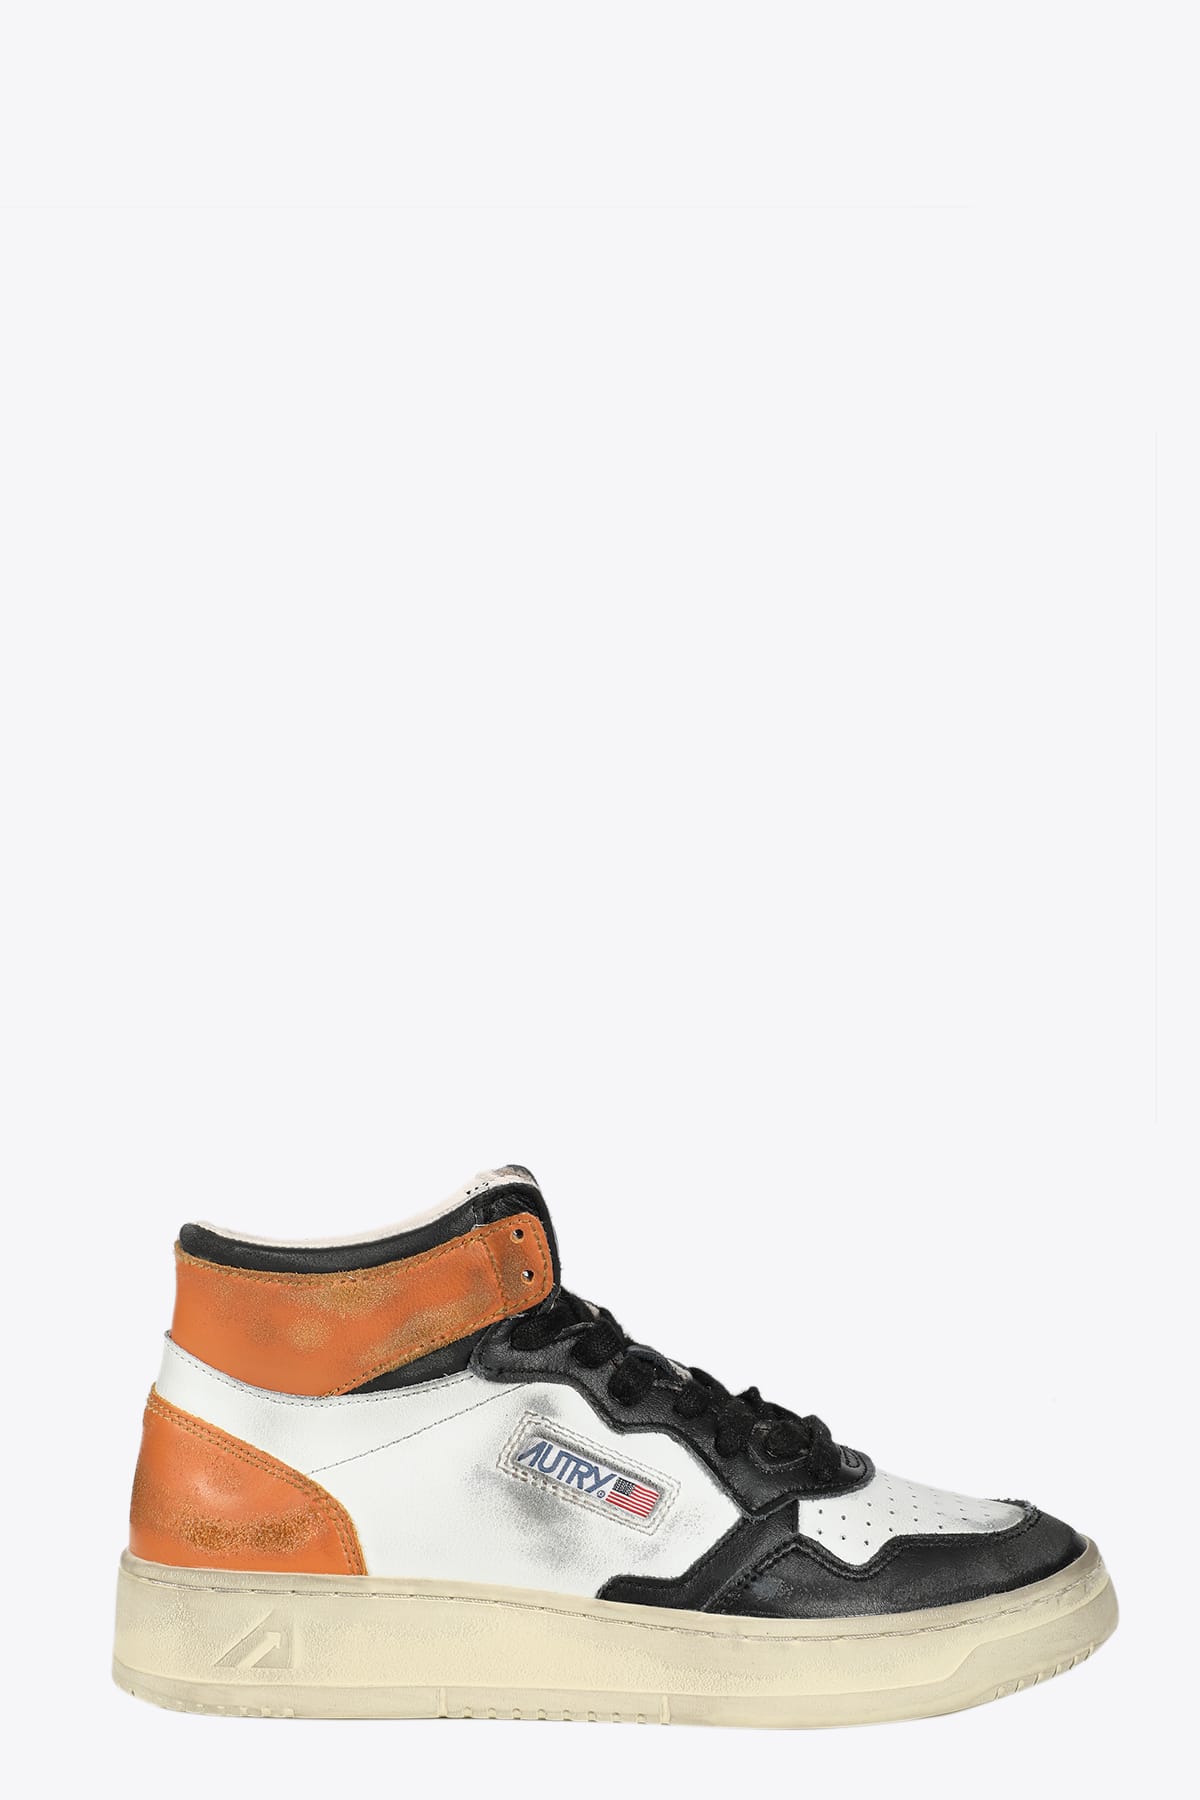 Autry Sup Vint Mid Man Leat/leat White/black/orange vintage leather hi-sneaker - Medalist